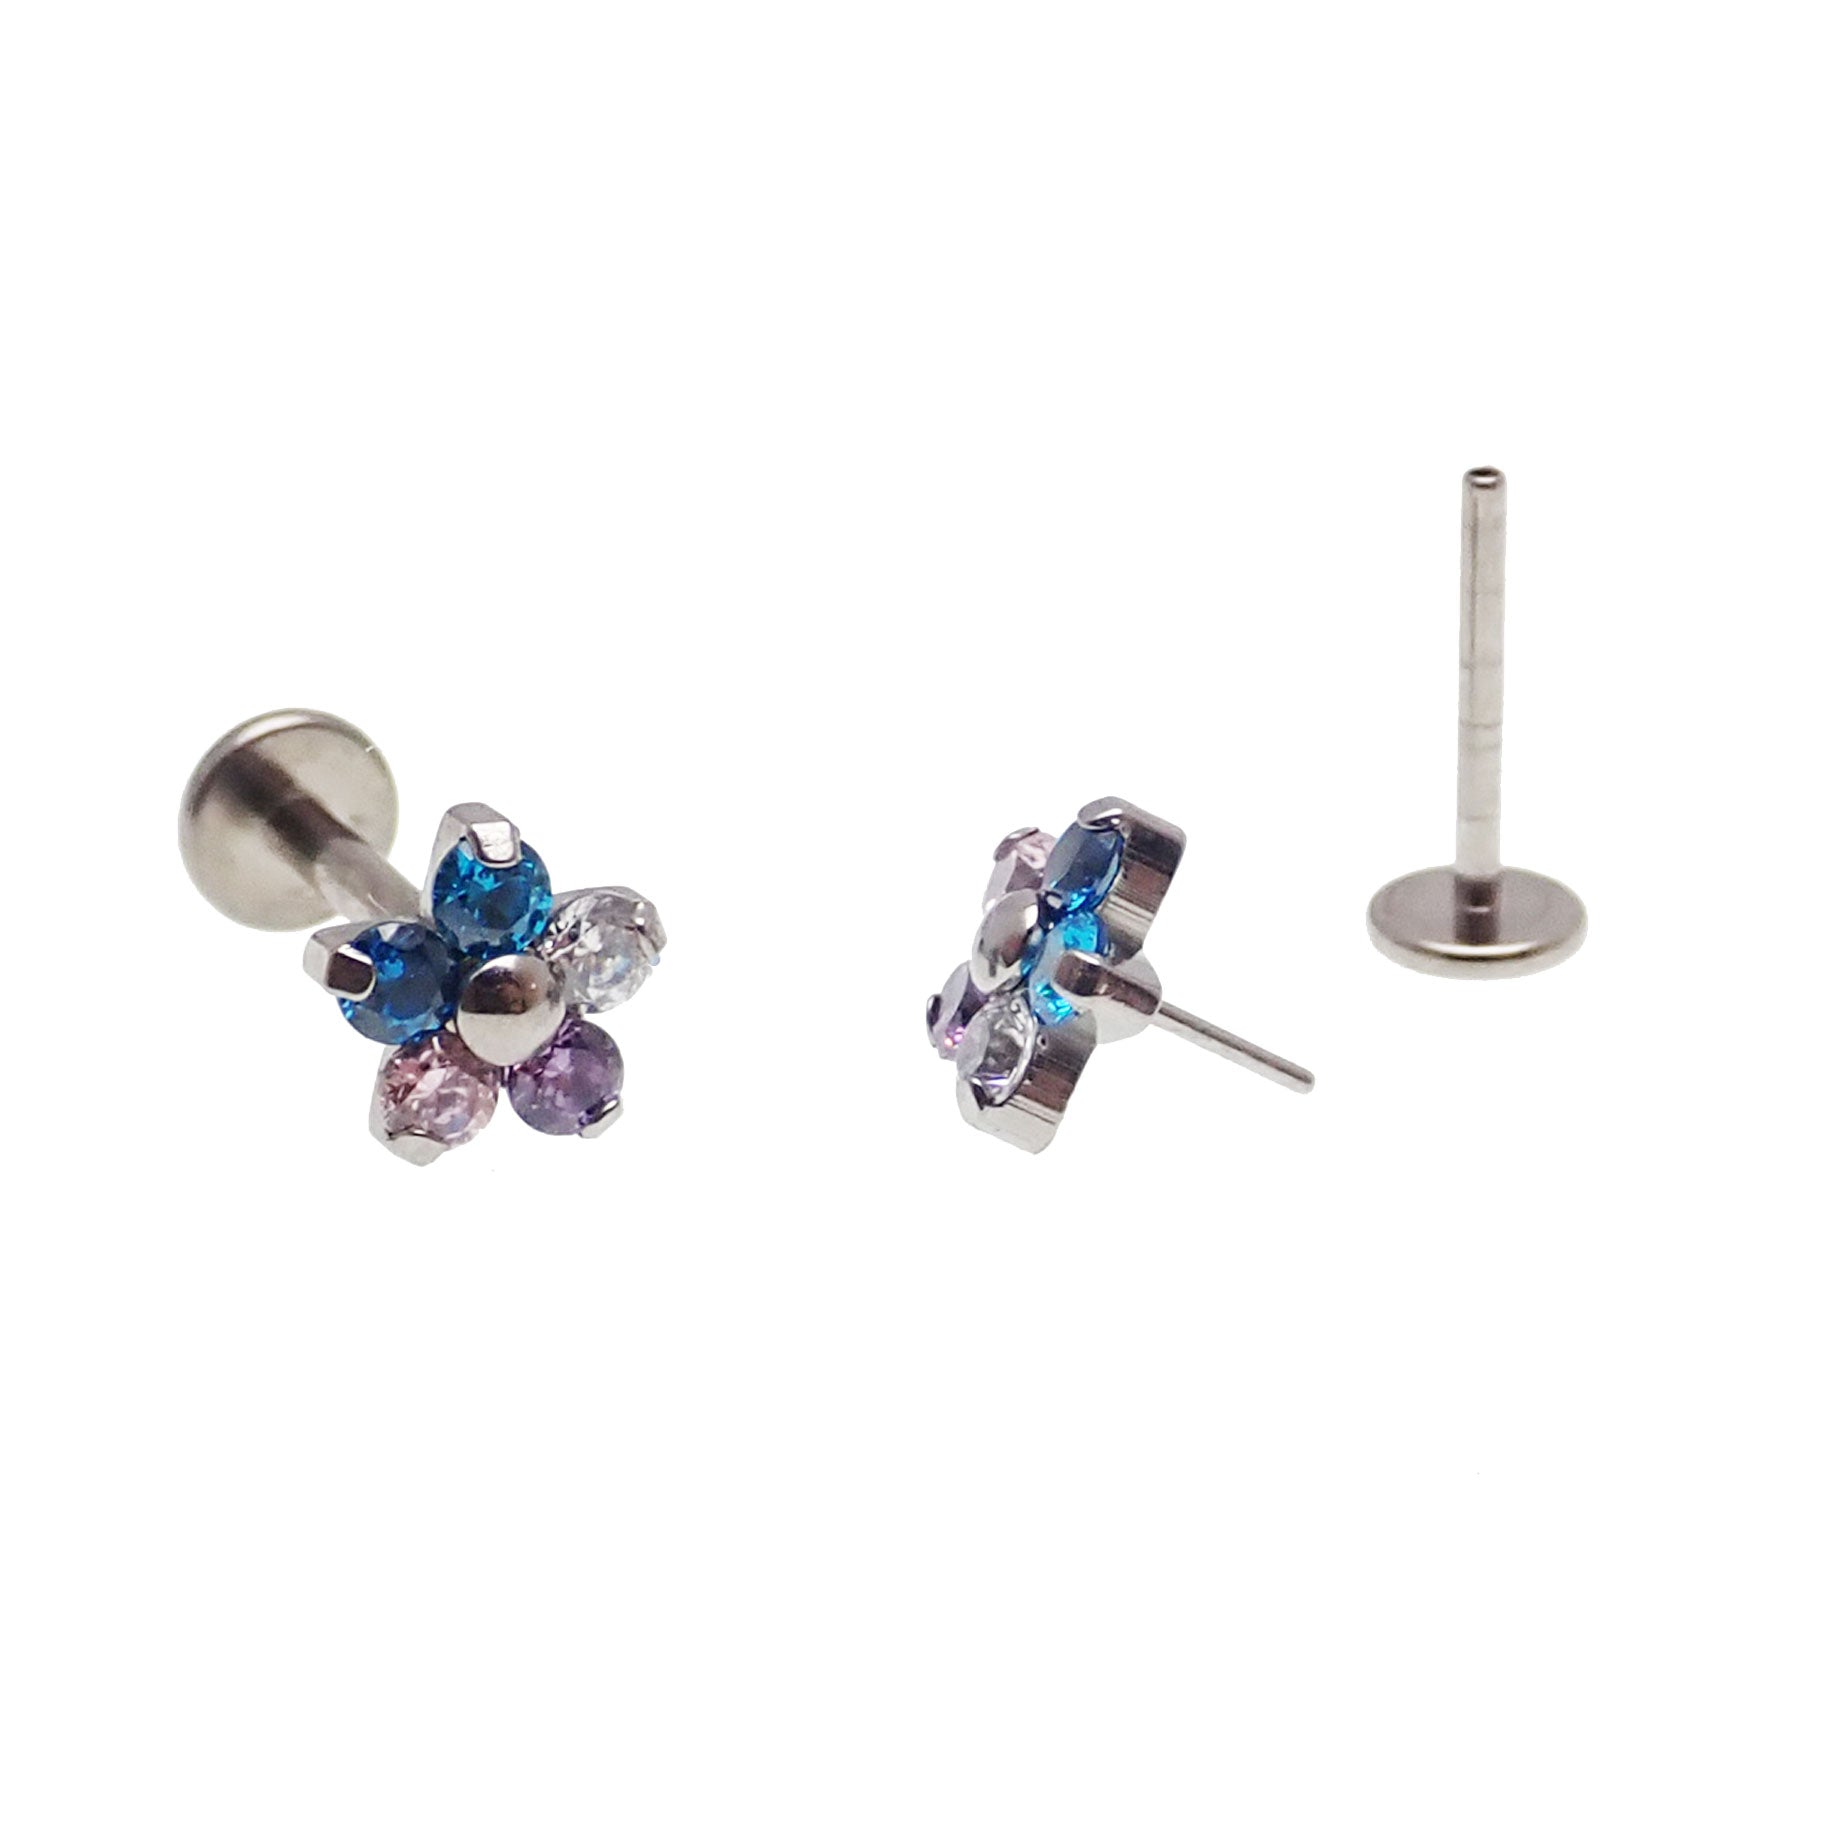 Pair Halobe Push Fit CZ Flower Earrings 20g – Body Clickers Body Jewelry